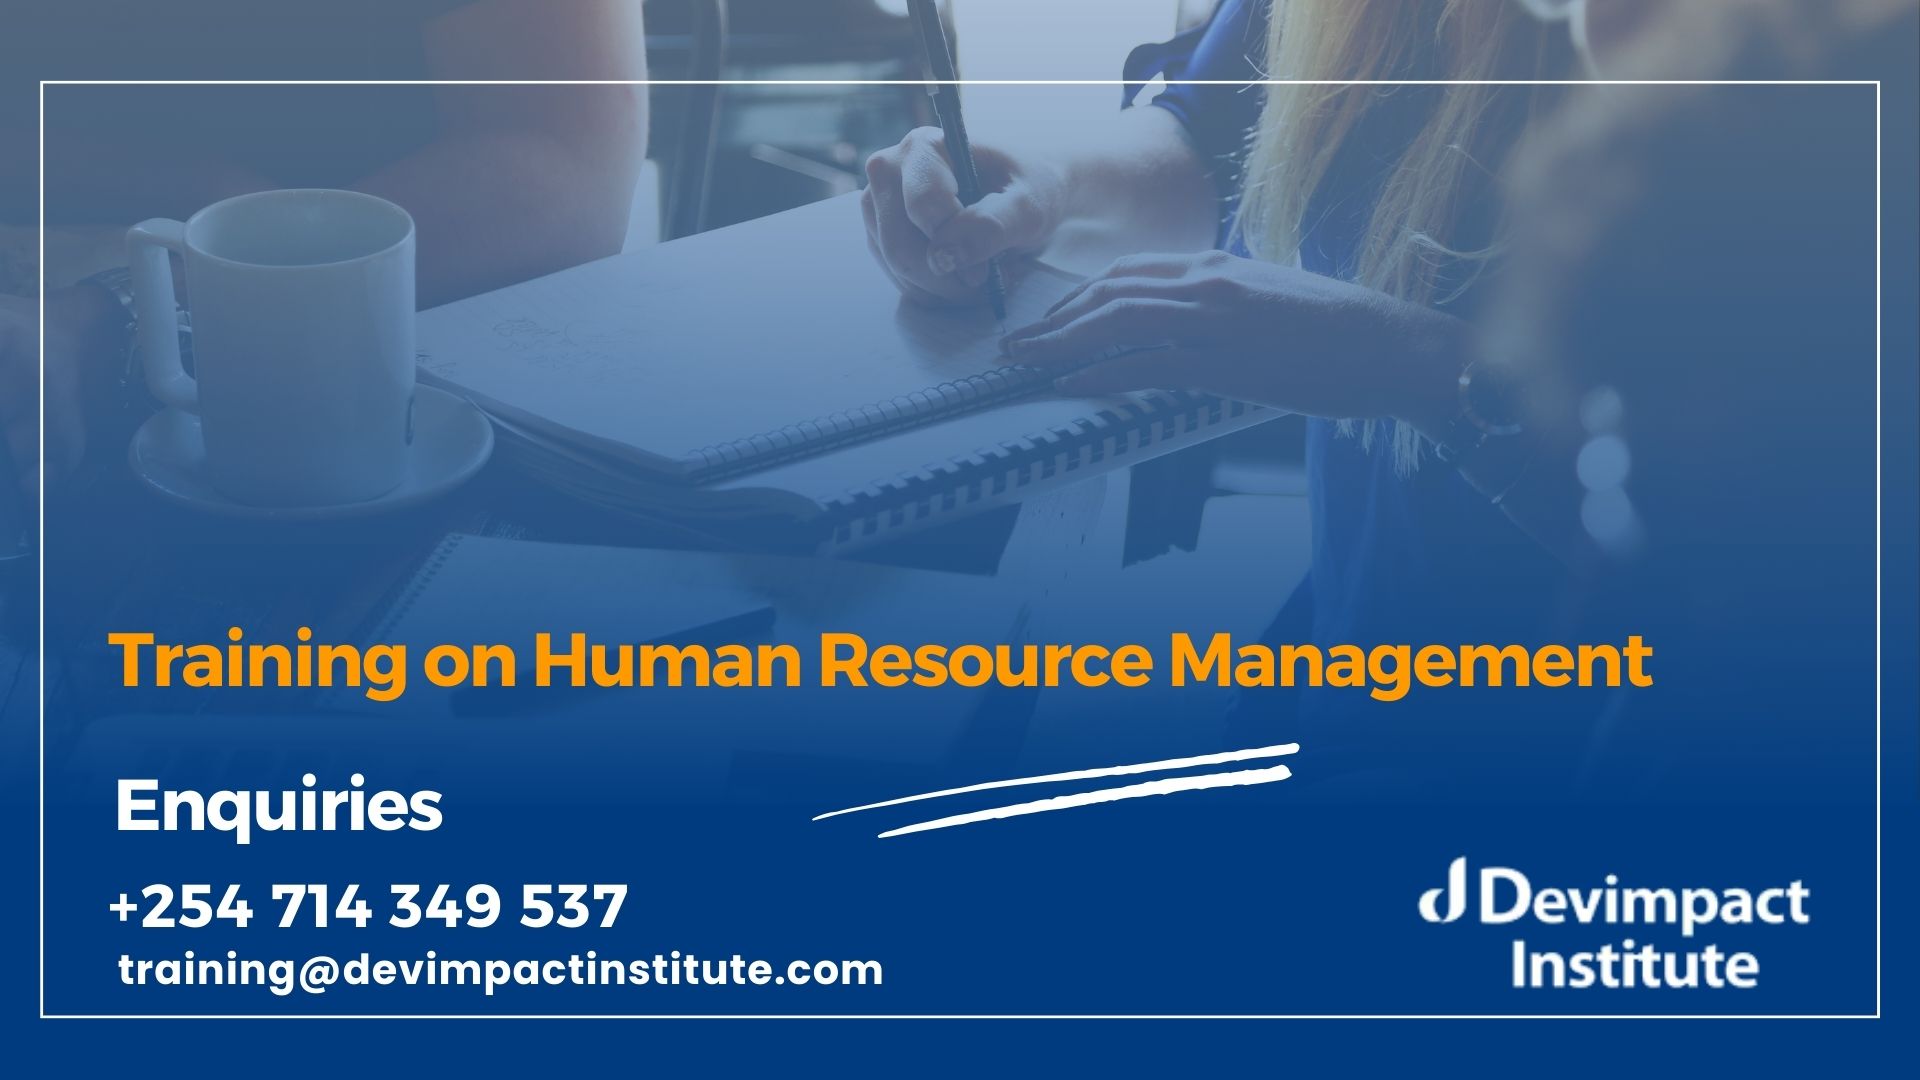 Training on Human Resource Management, Devimpact Institute, Nairobi, Kenya